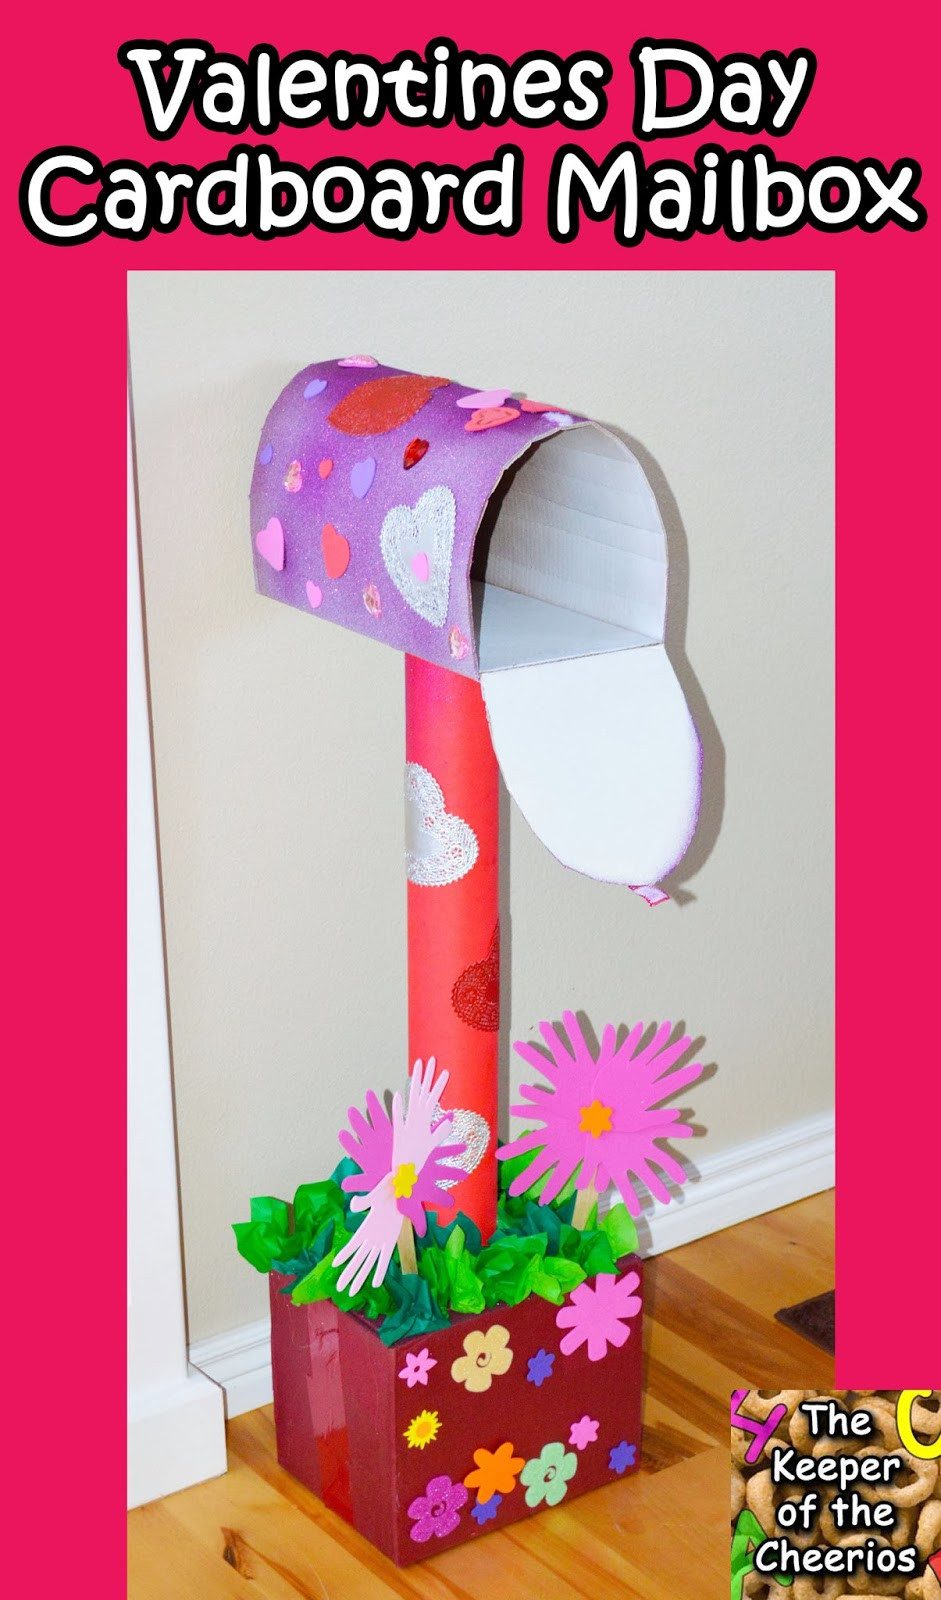 Best ideas about DIY Valentine Mailbox
. Save or Pin Valentines Day Cardboard Mailbox DIY Now.